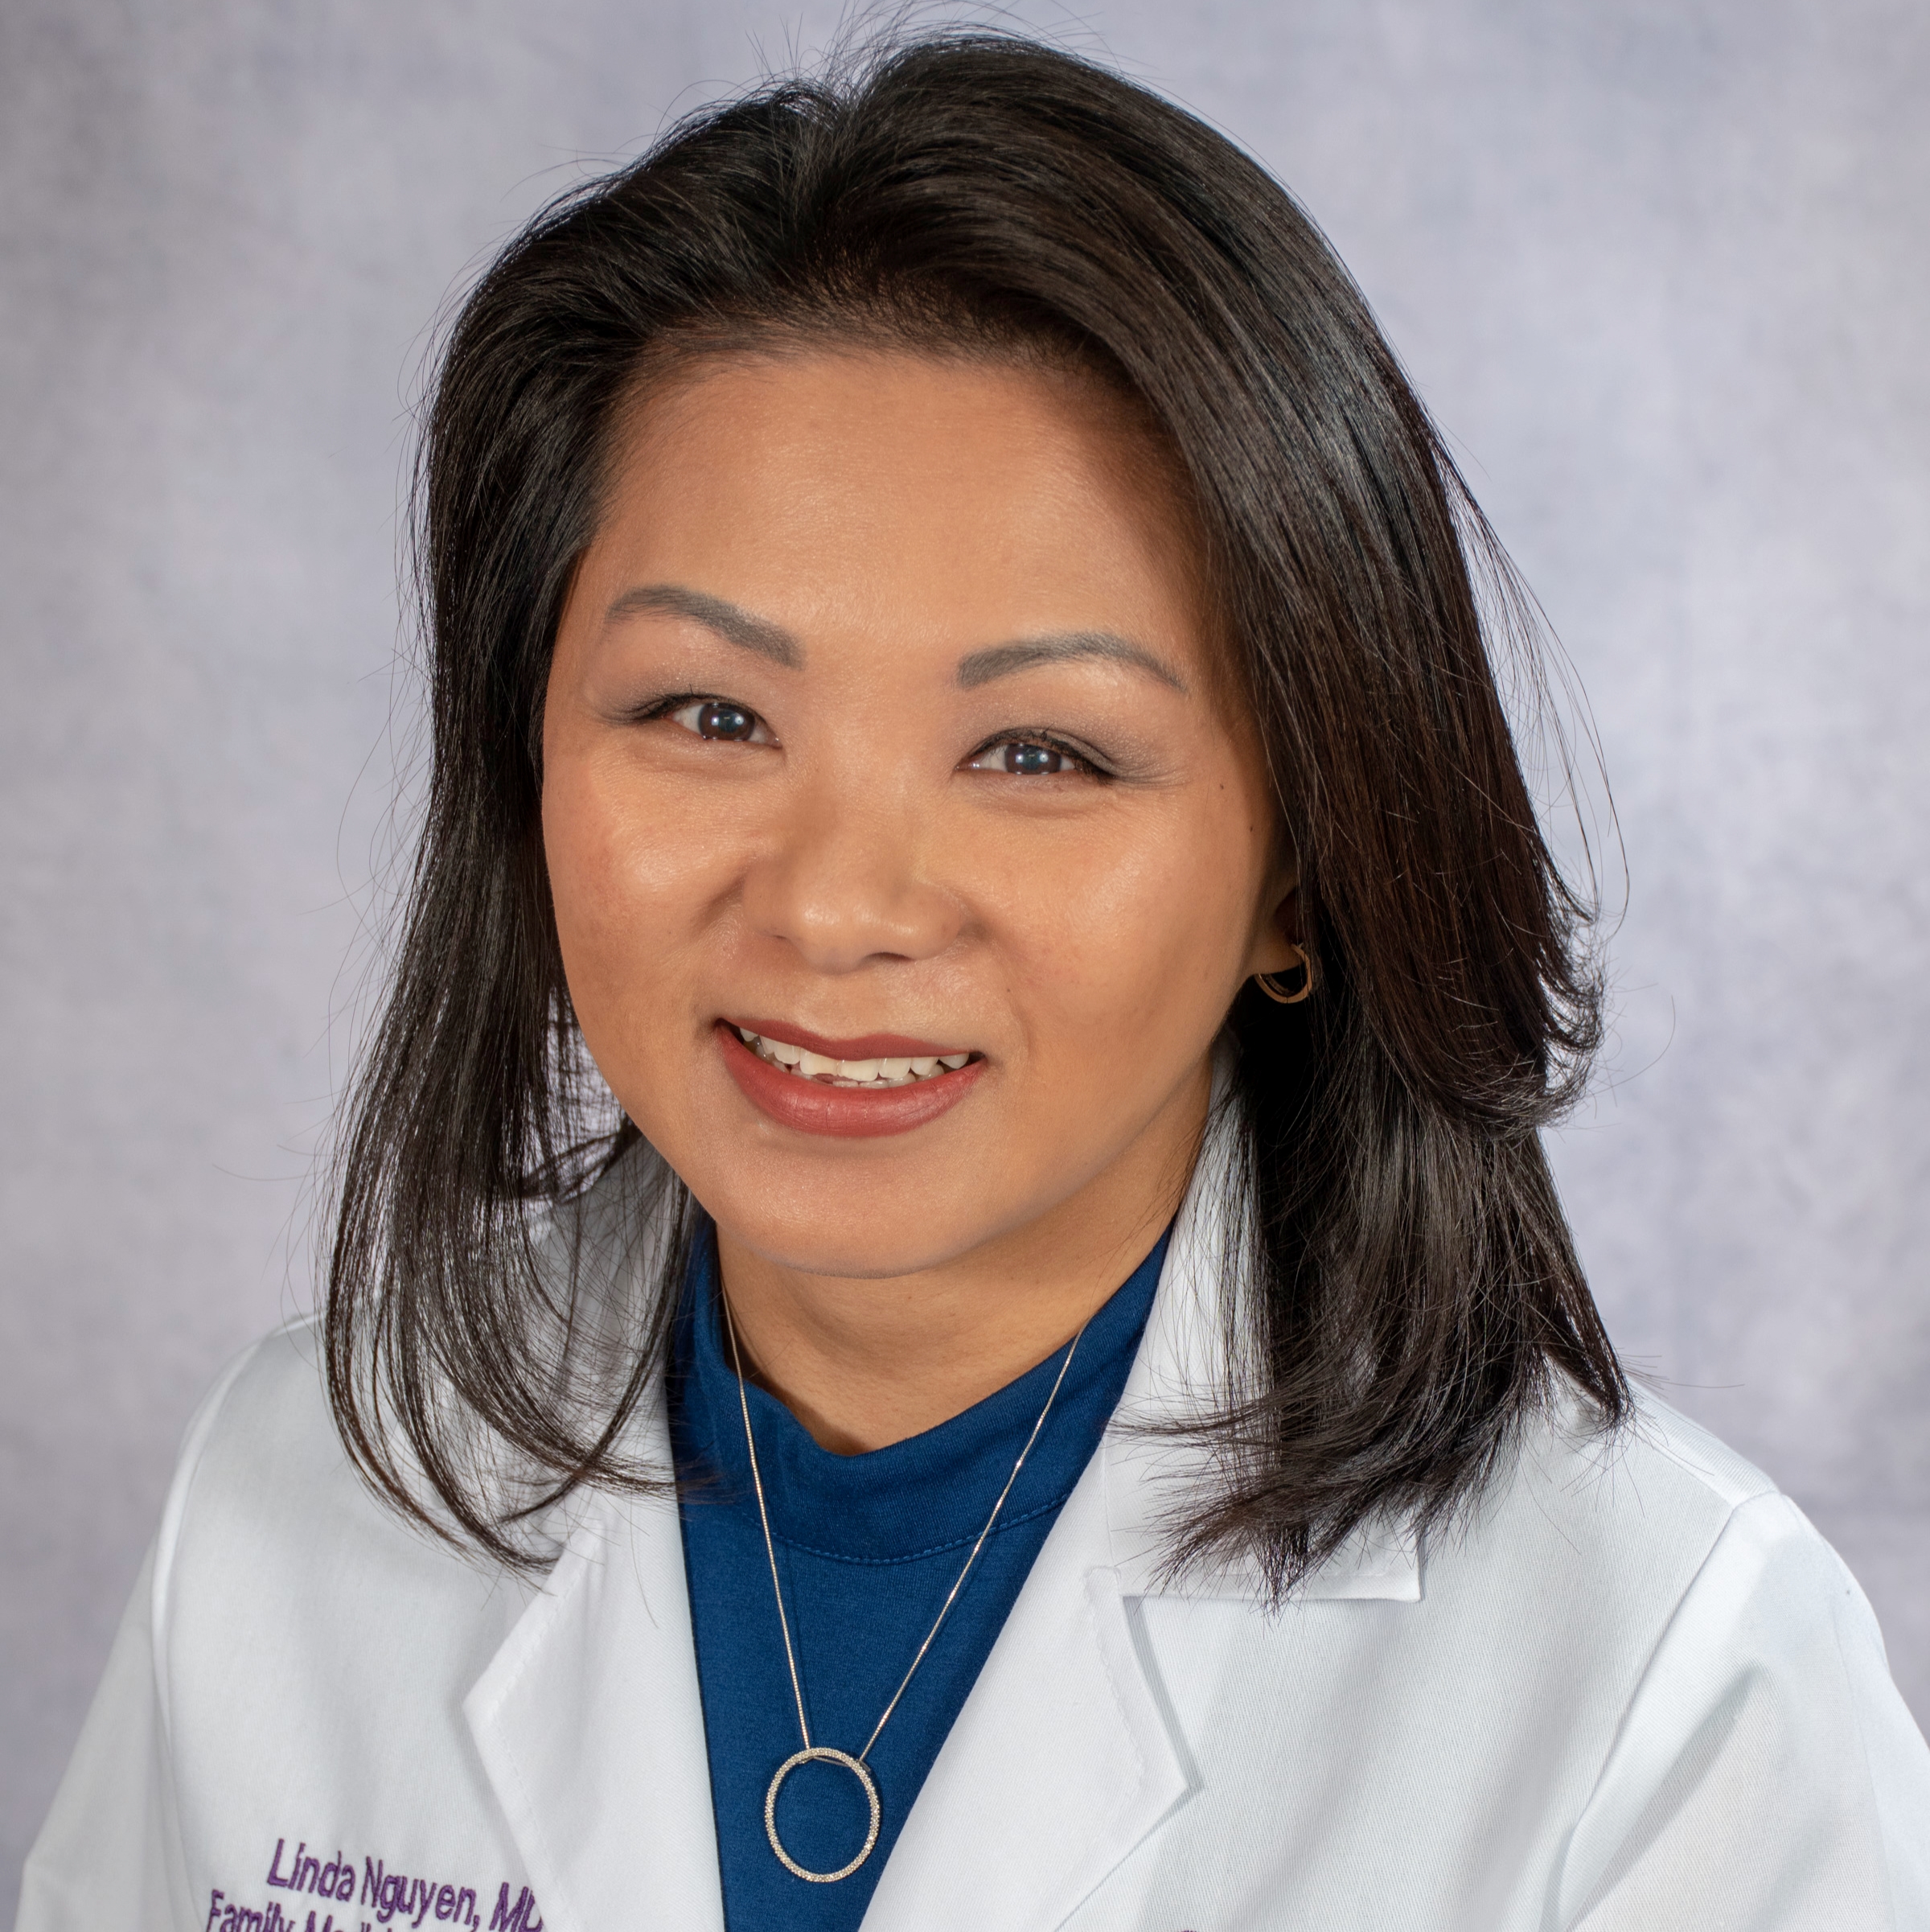 A friendly headshot of Dr. Nguyen